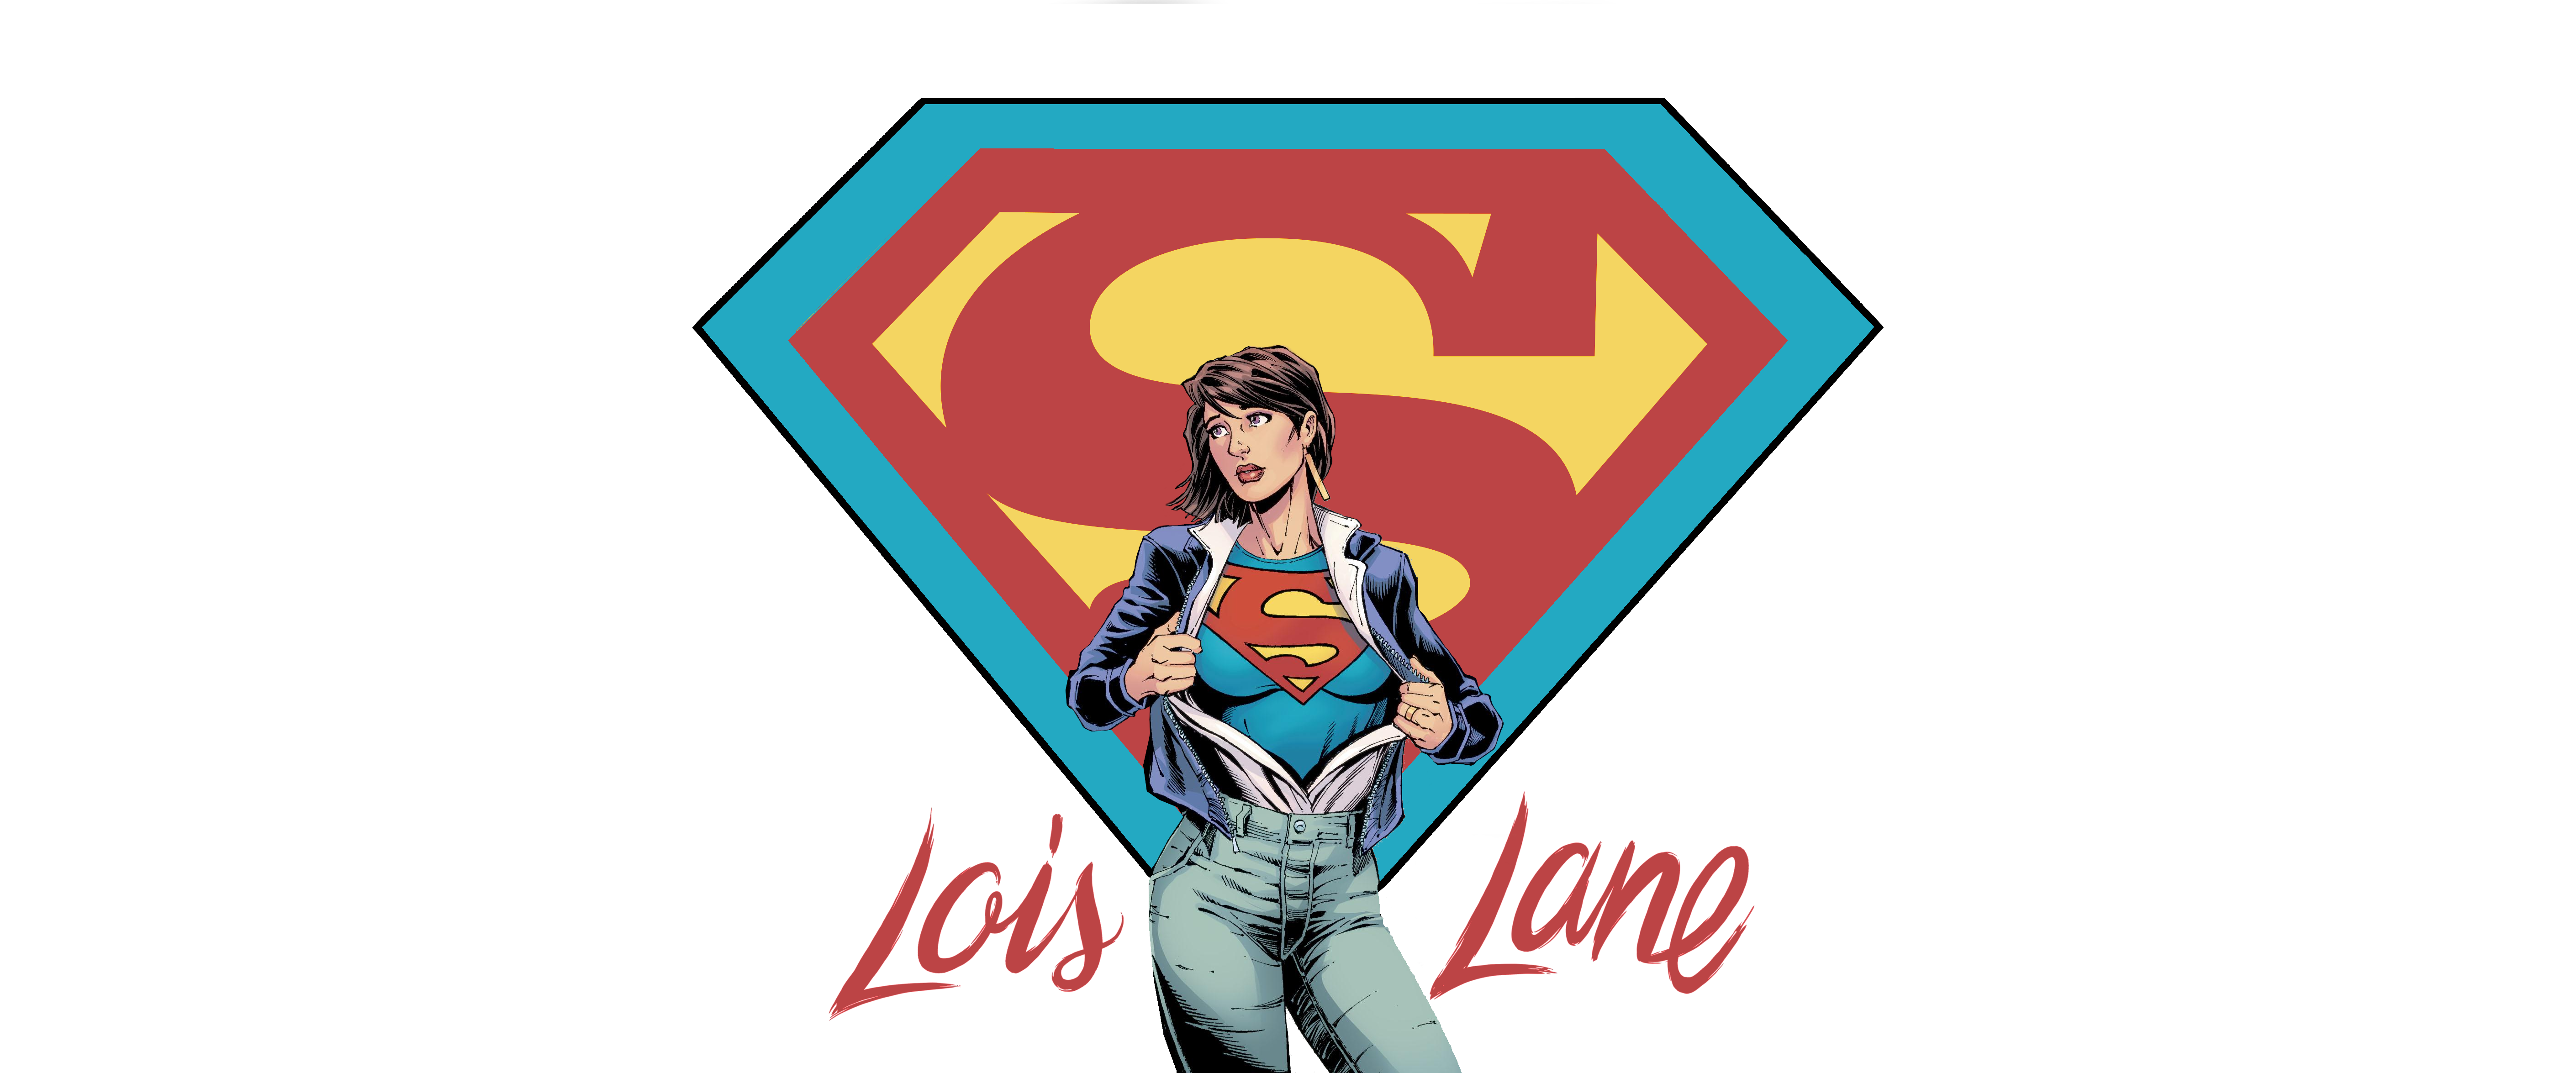 16:9 21:9 Custom Lois Lane Superwoman Wallpaper From AC